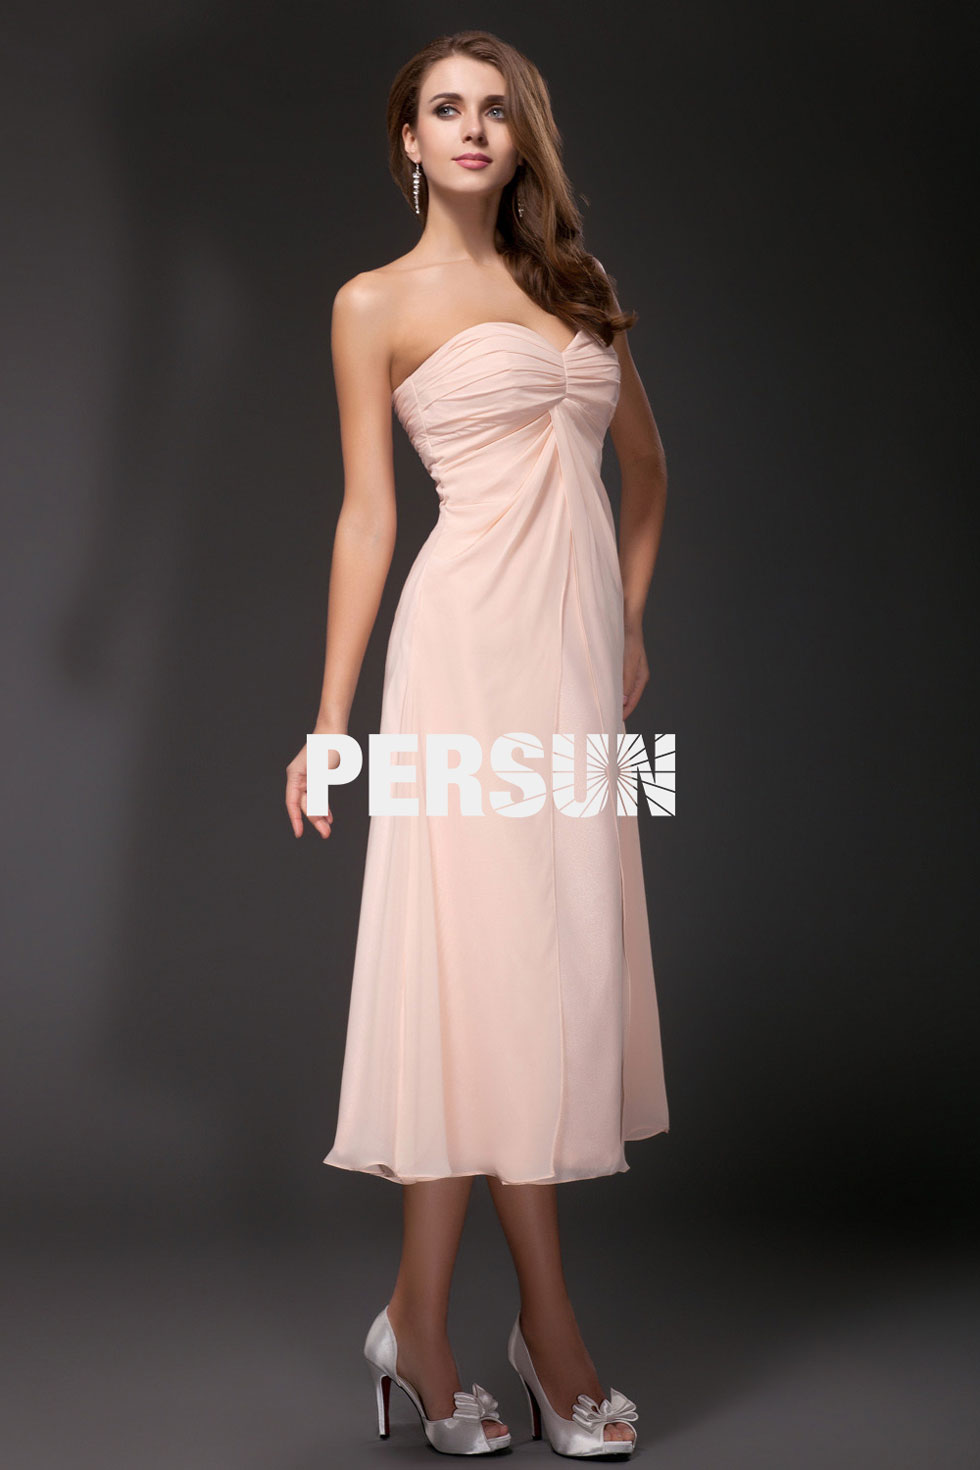 Sweetheart Tea length Formal Bridesmaid Dress in pale pink chiffon